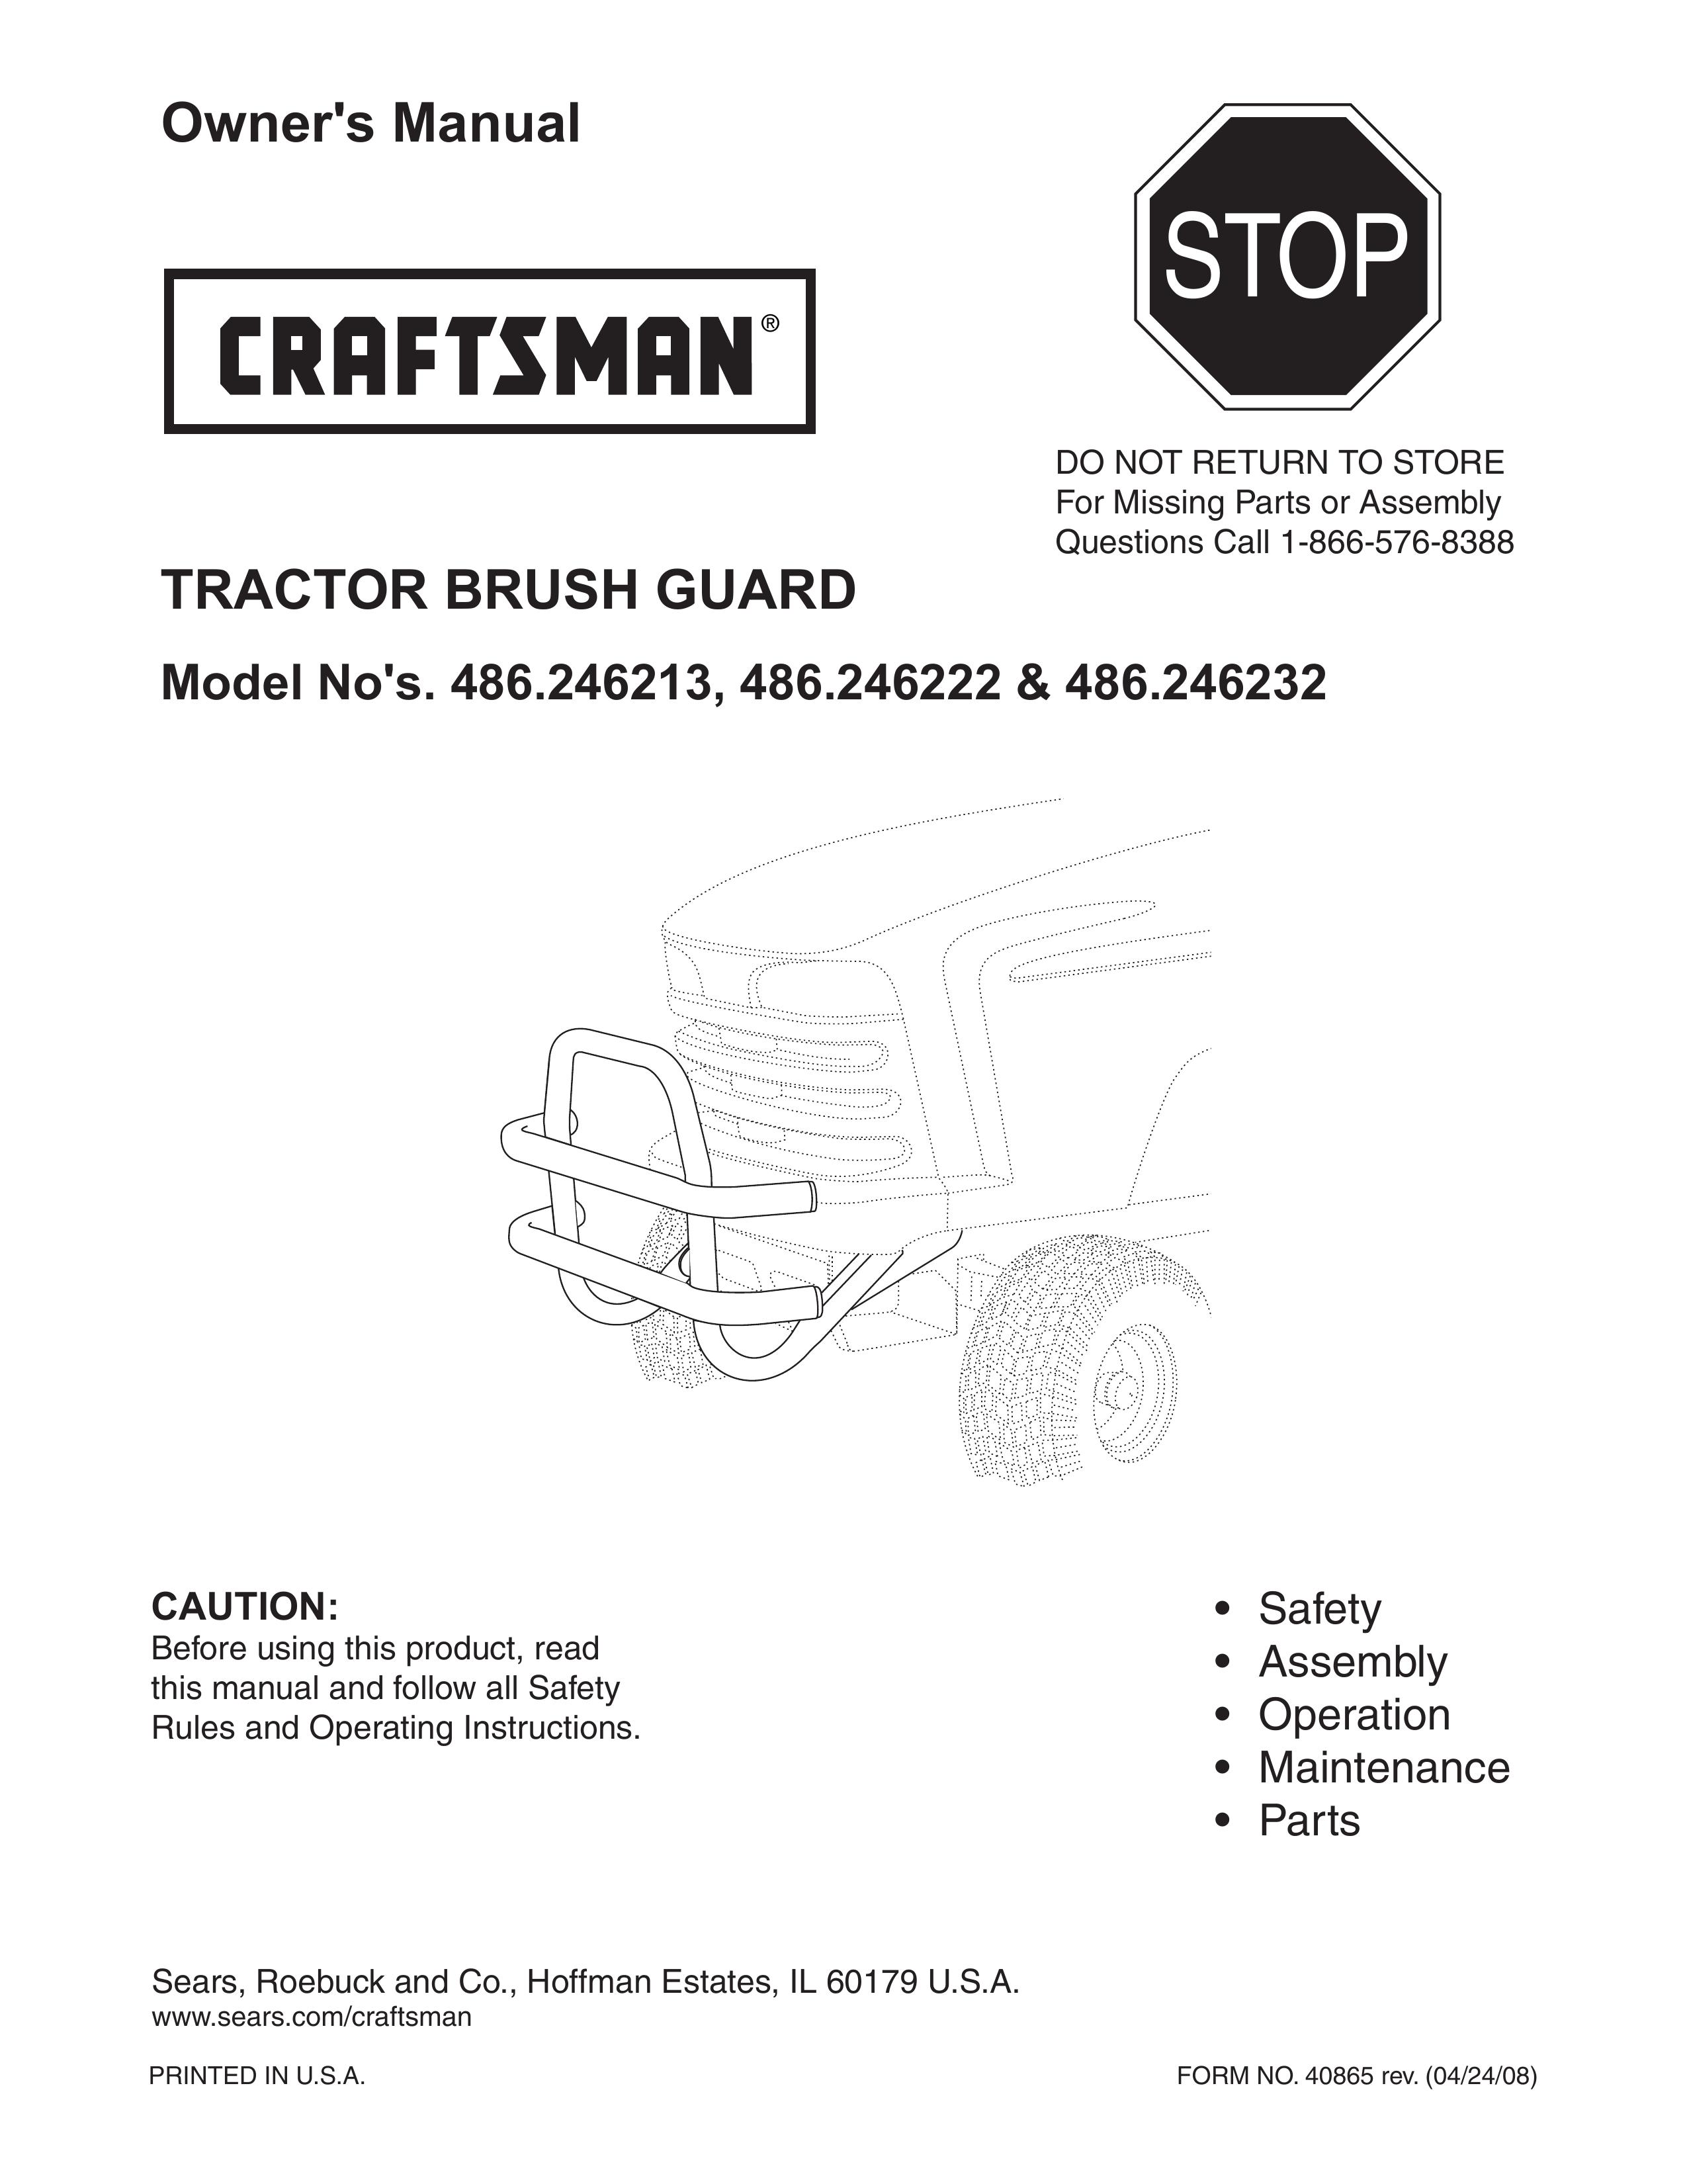 Craftsman 486.246232 Lawn Mower Accessory User Manual